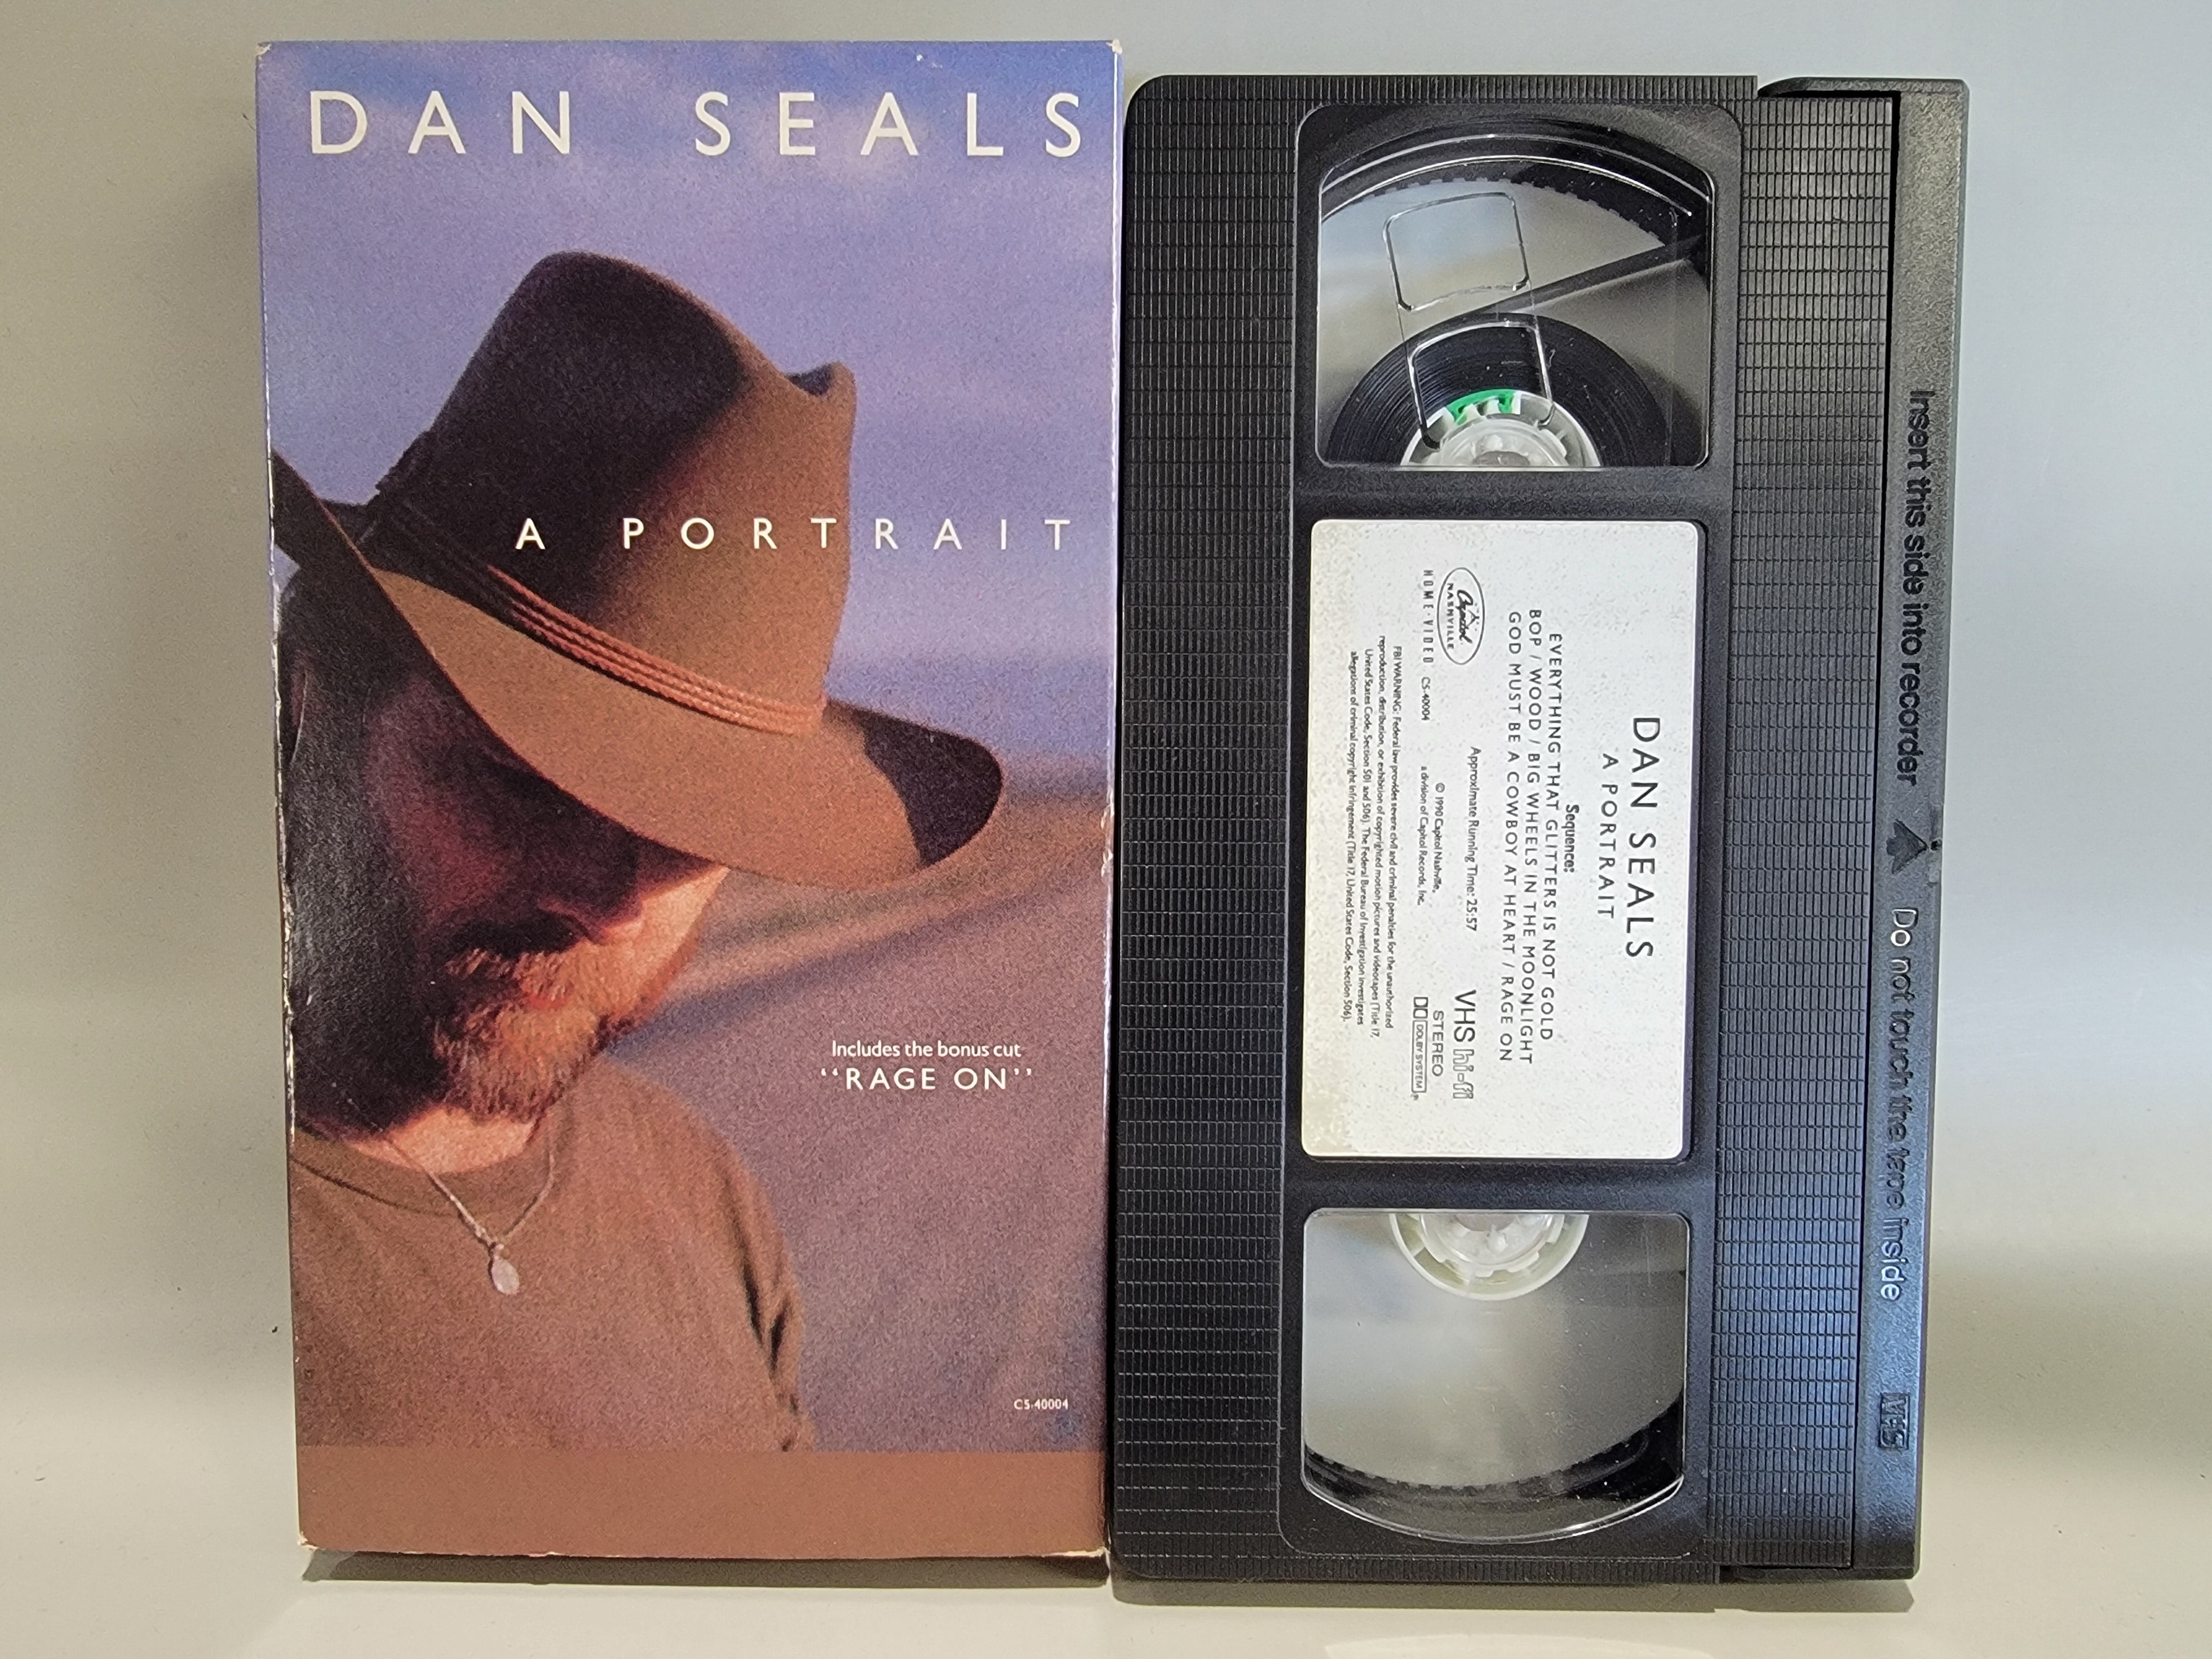 DAN SEALS: A PORTRAIT VHS [USED]